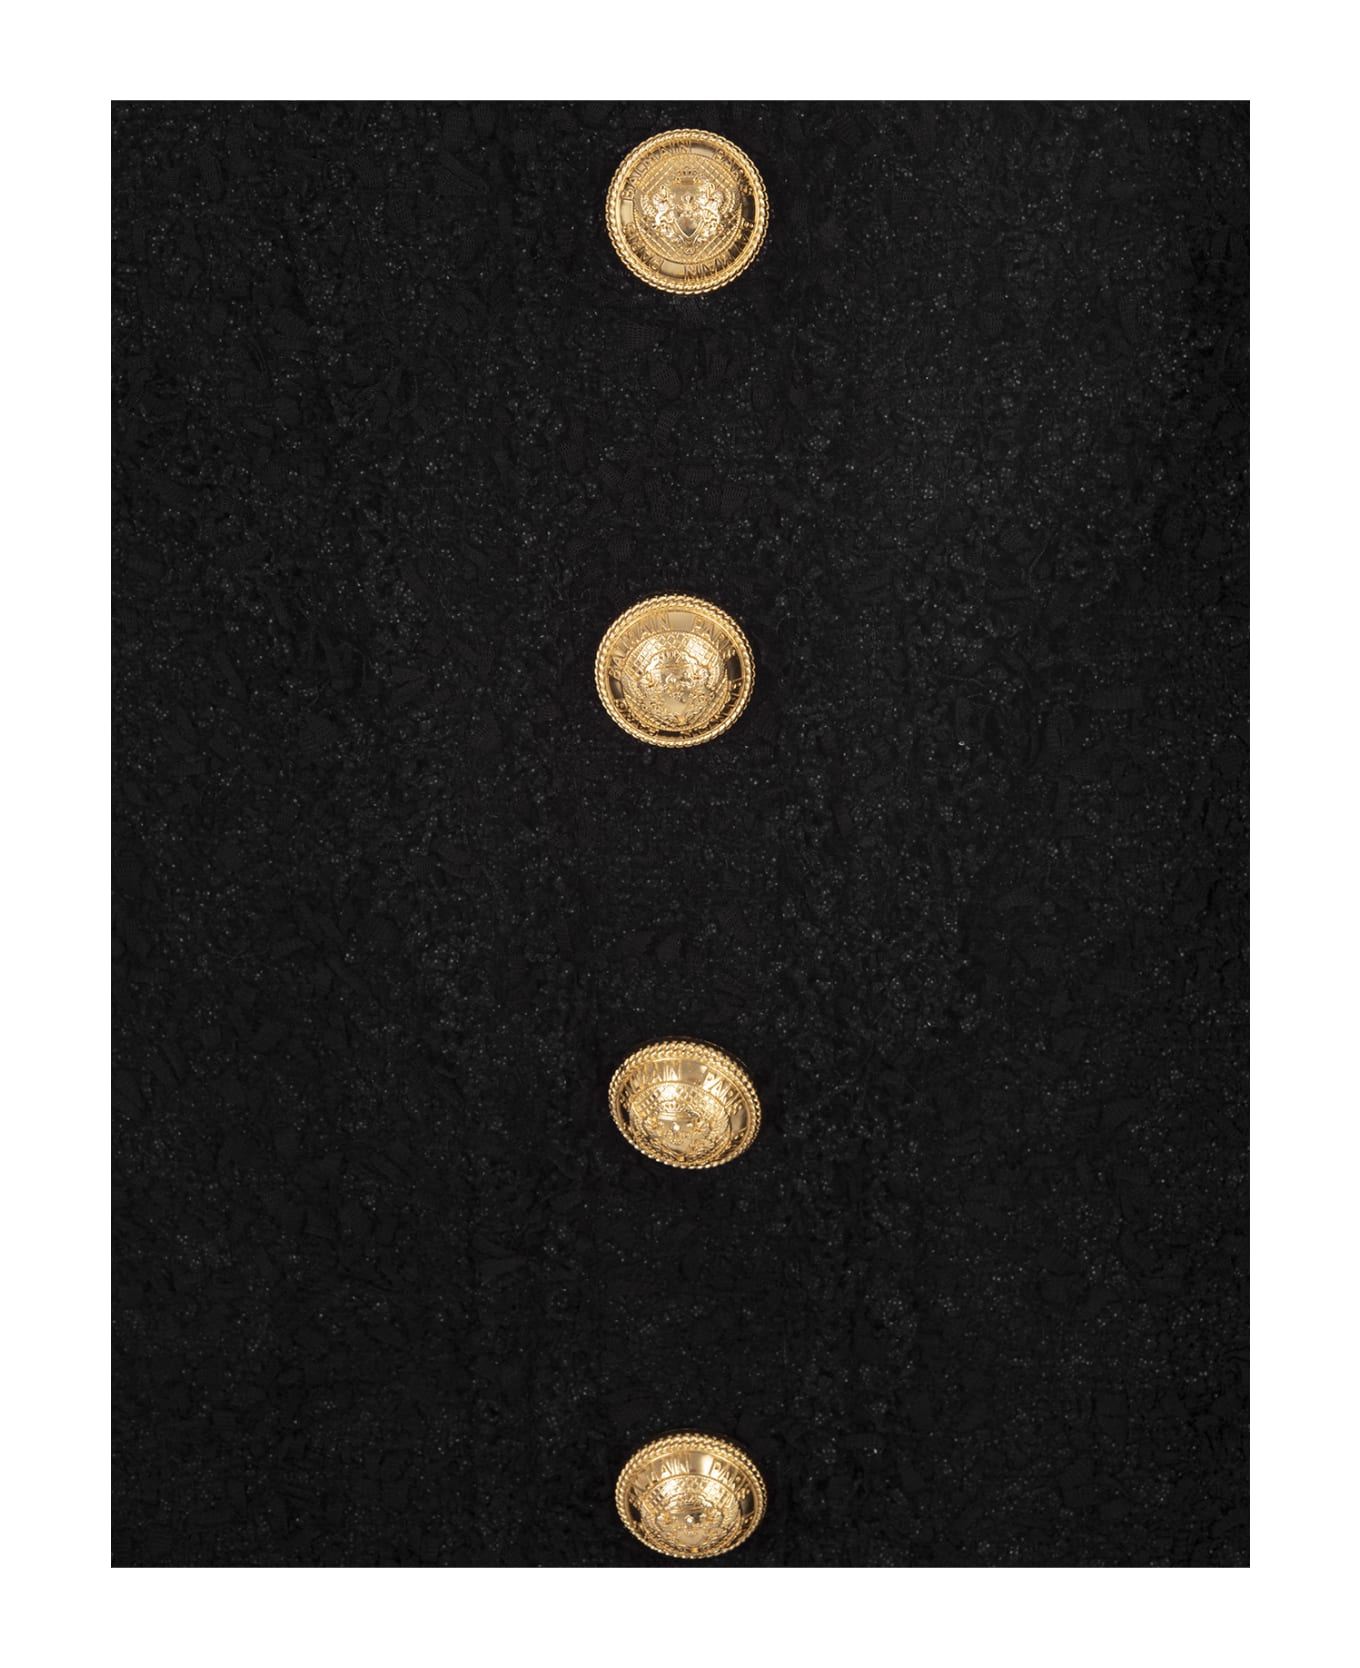 Balmain Black Tweed Skirt With Gold Buttons - Pa Noir